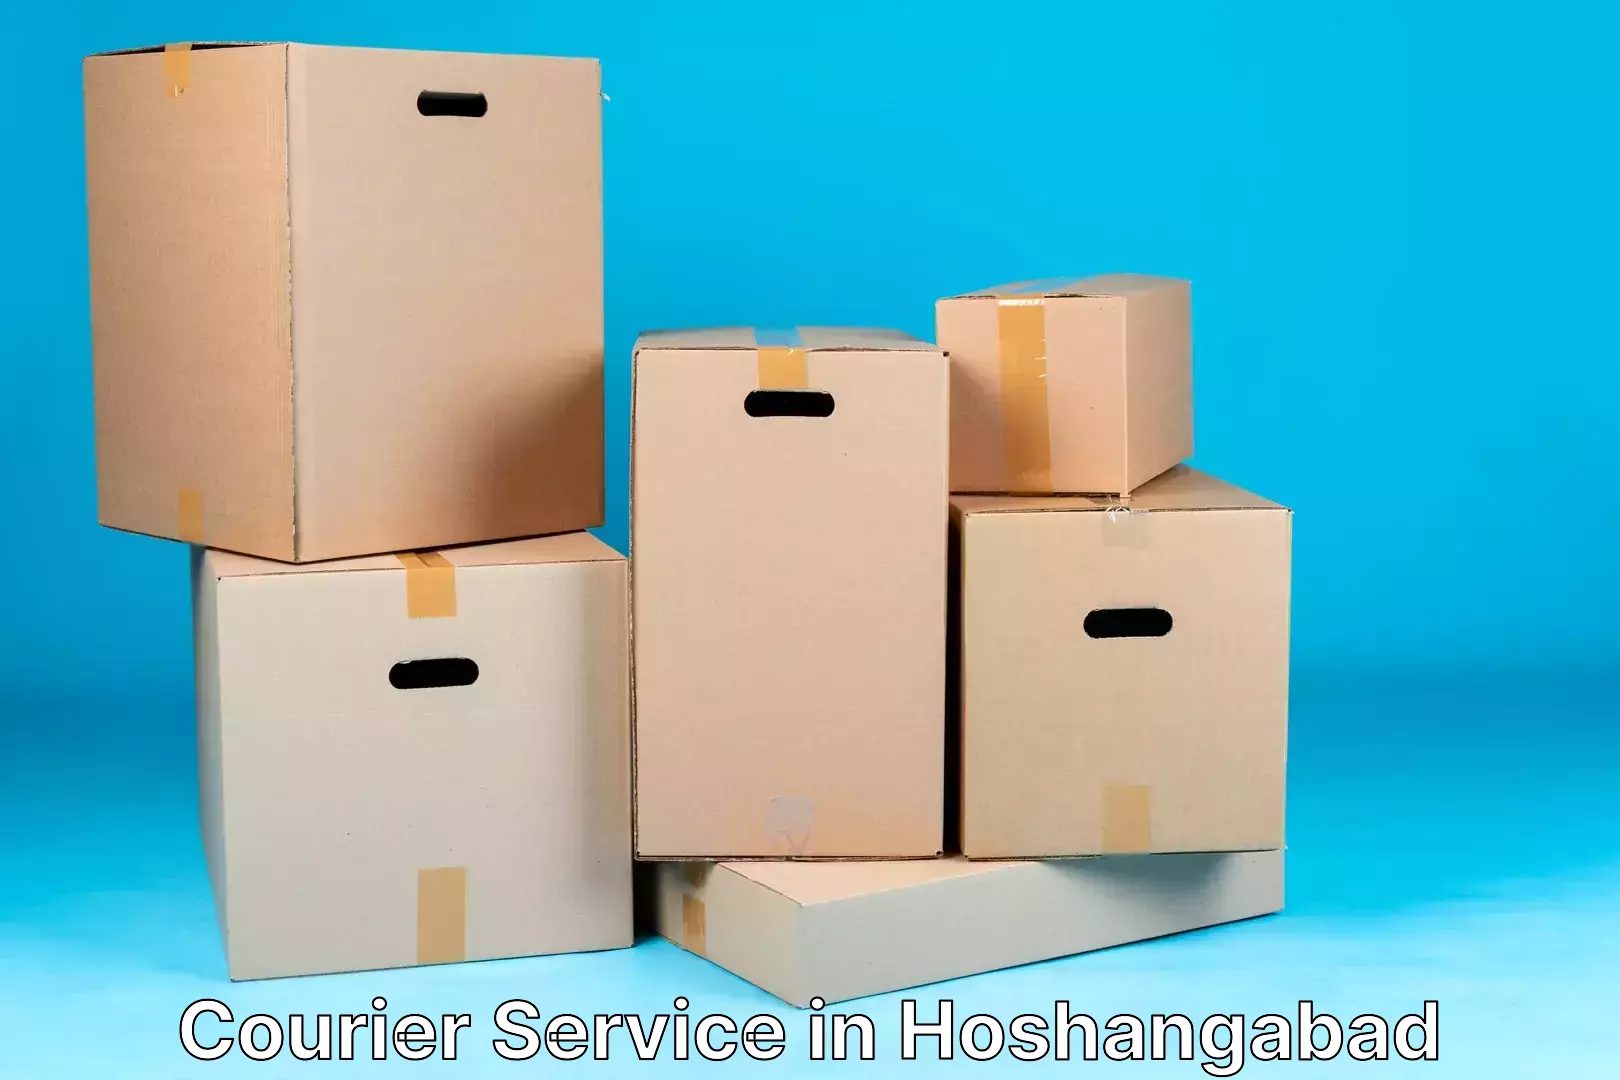 Express logistics providers in Hoshangabad